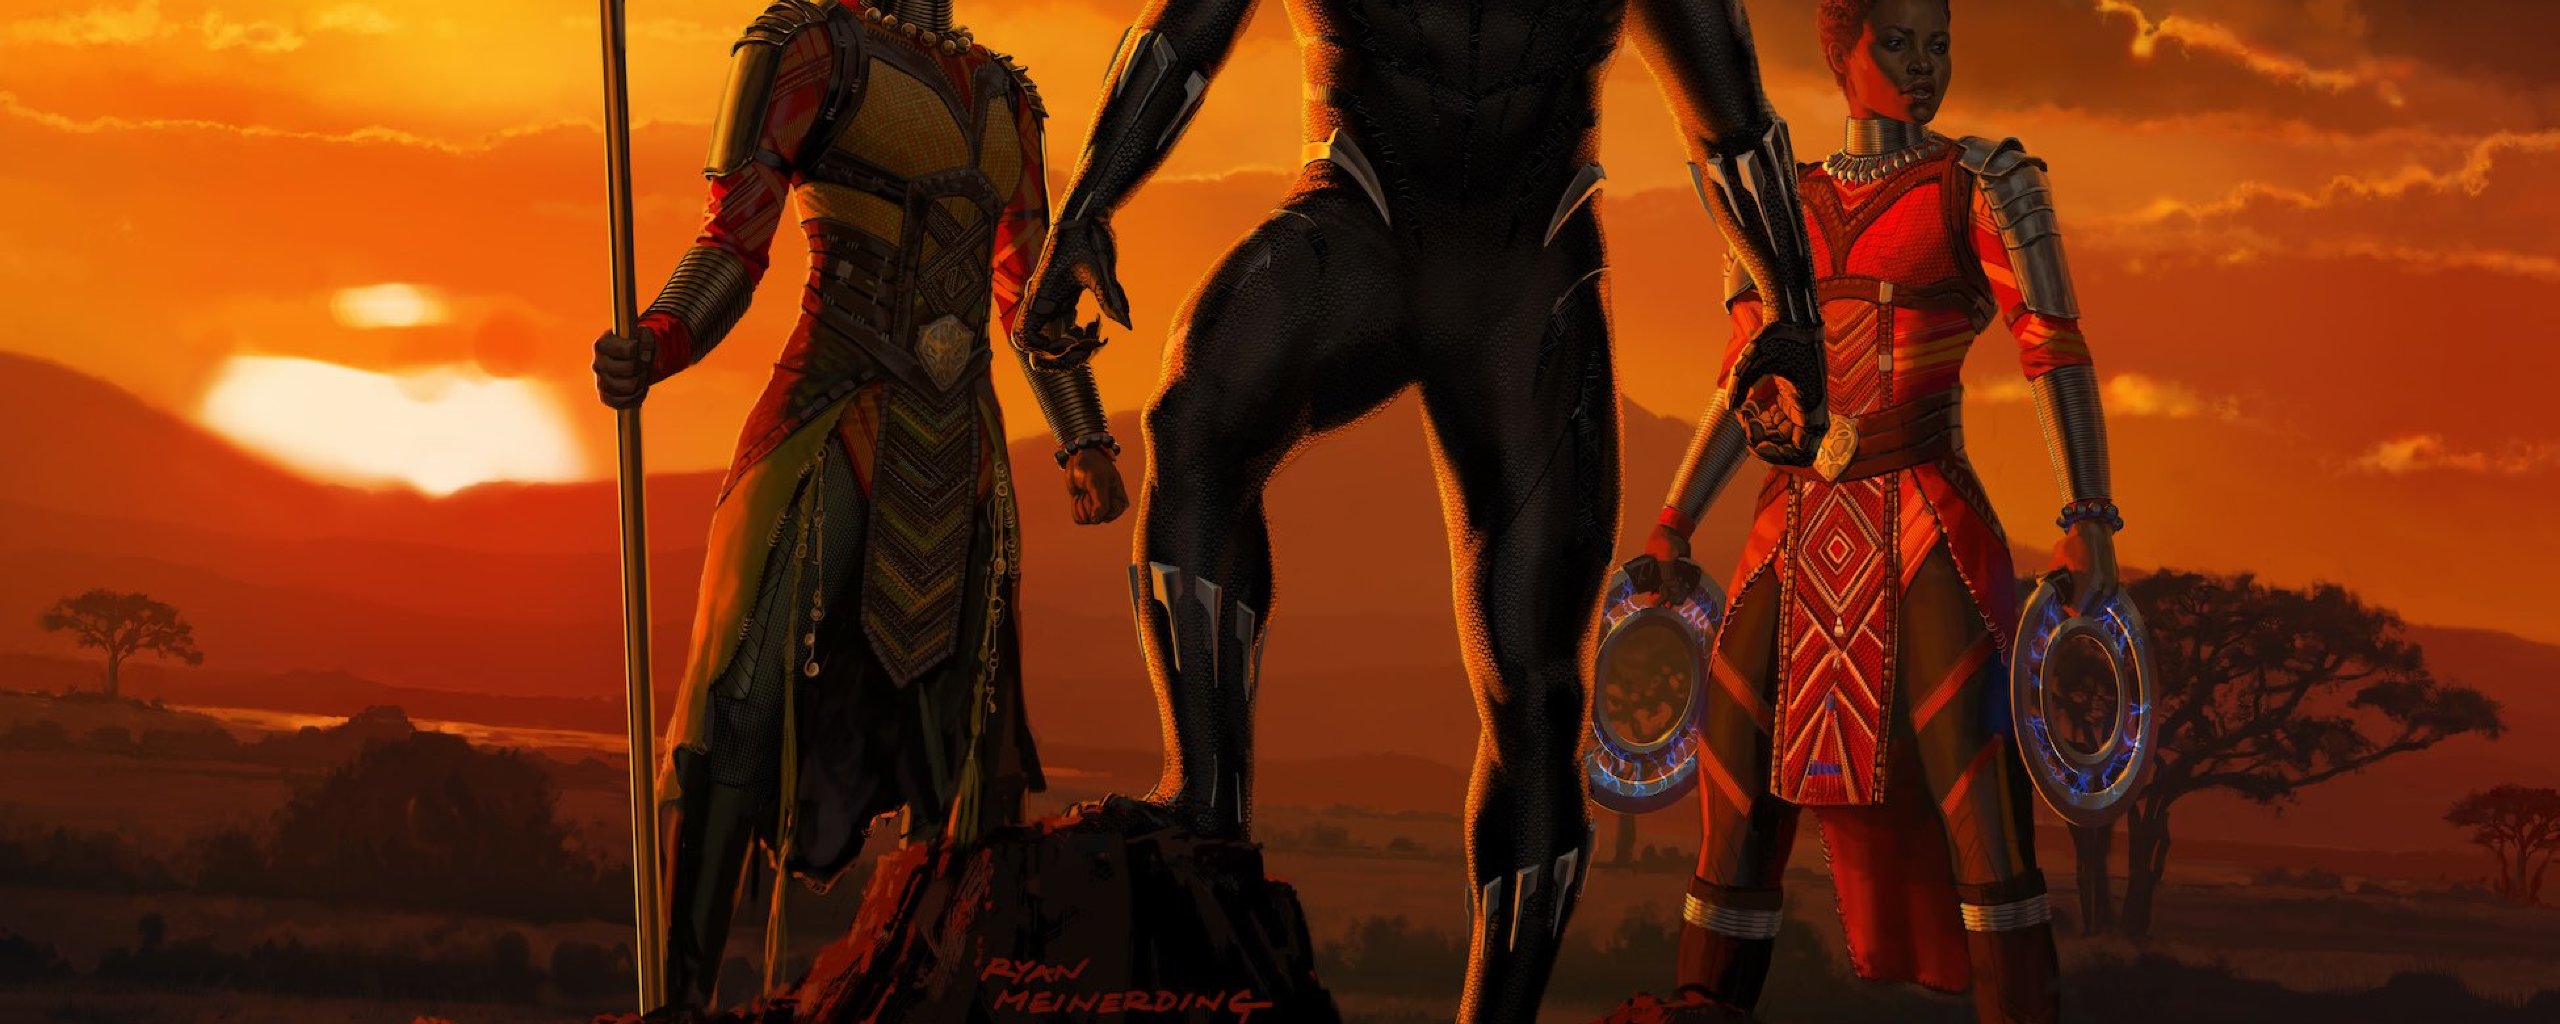 Free download Black Panther Movie Artwork Full HD Wallpaper [2560x1024